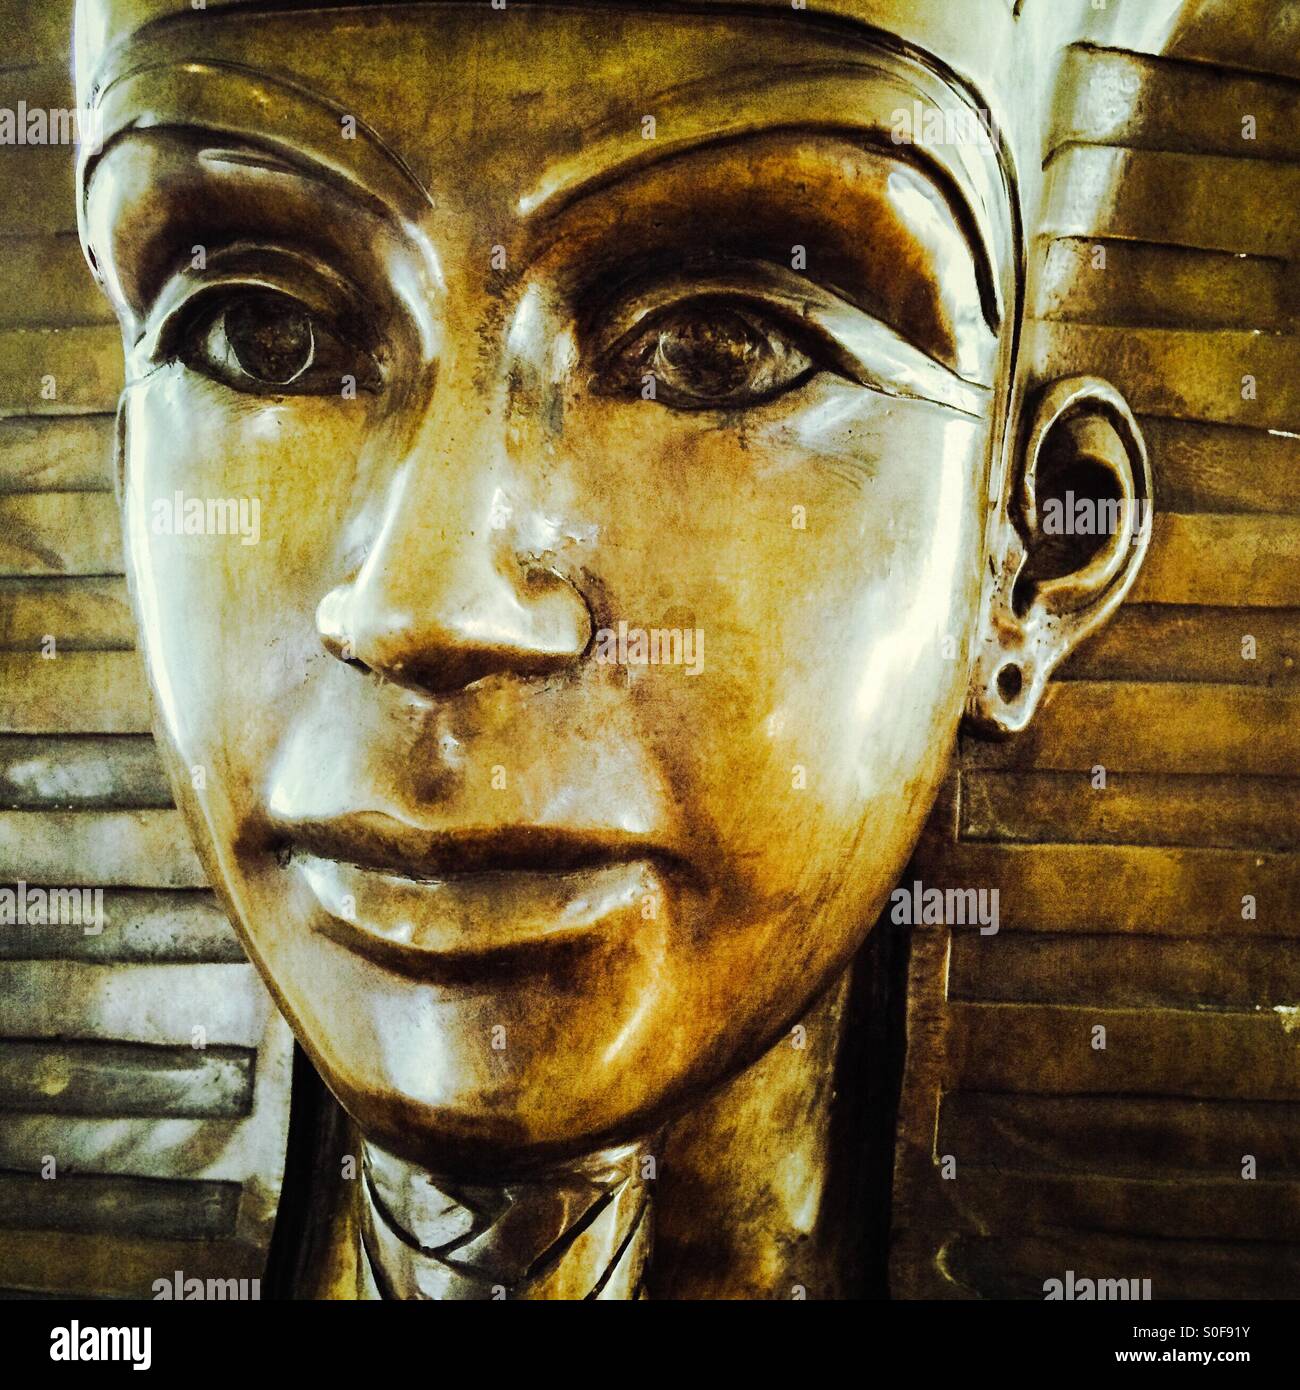 Copy of King Tut's mummy mask Stock Photo